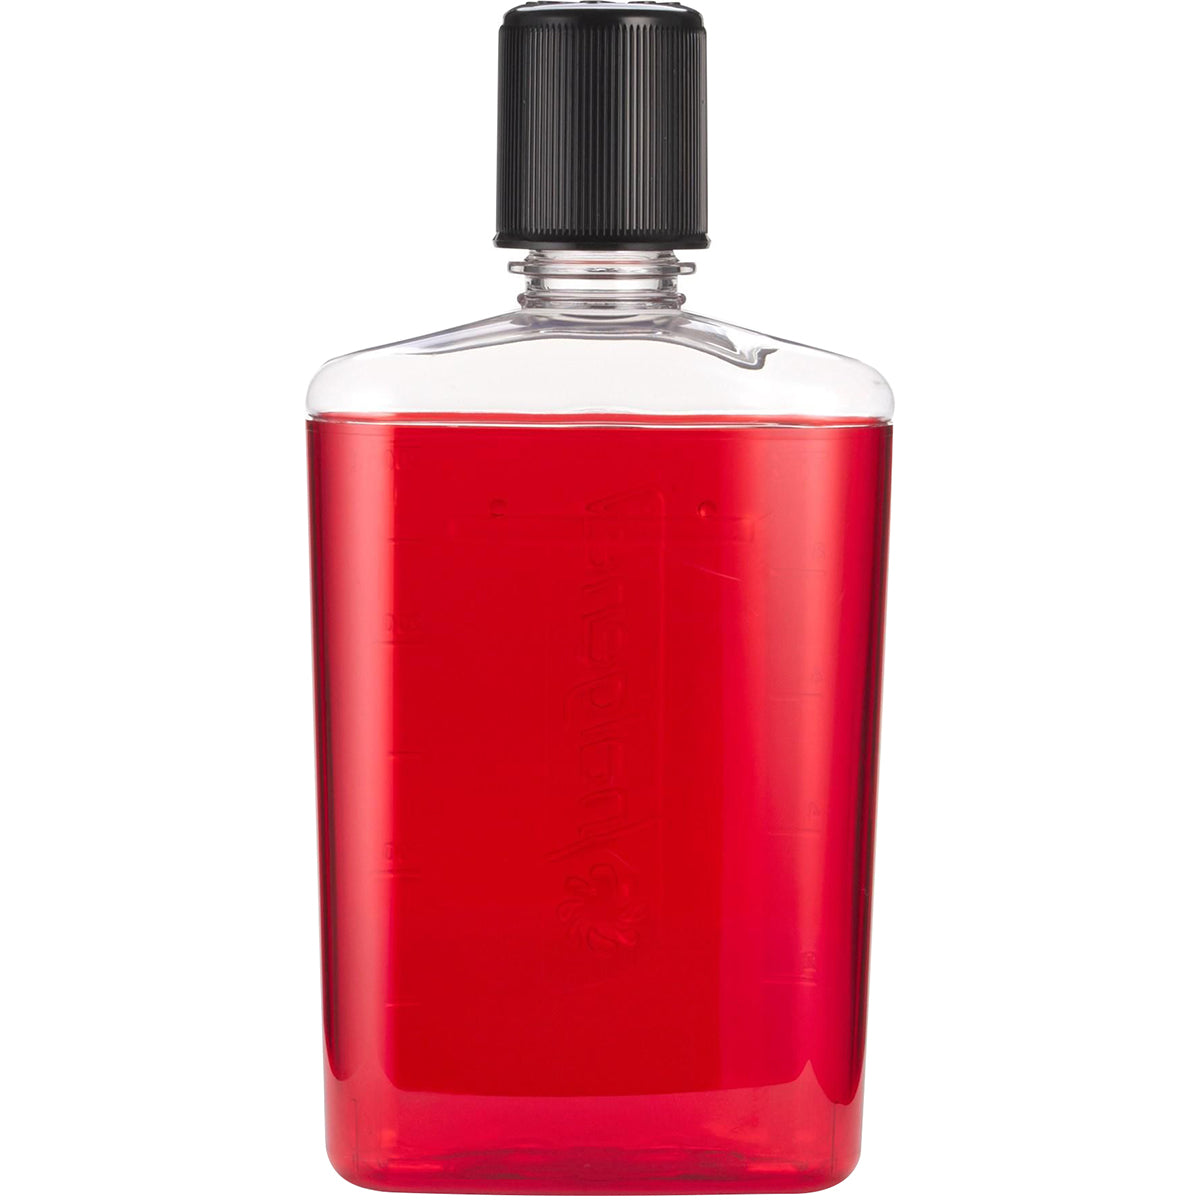 Nalgene Sustain 10 oz. Flask - Red Nalgene